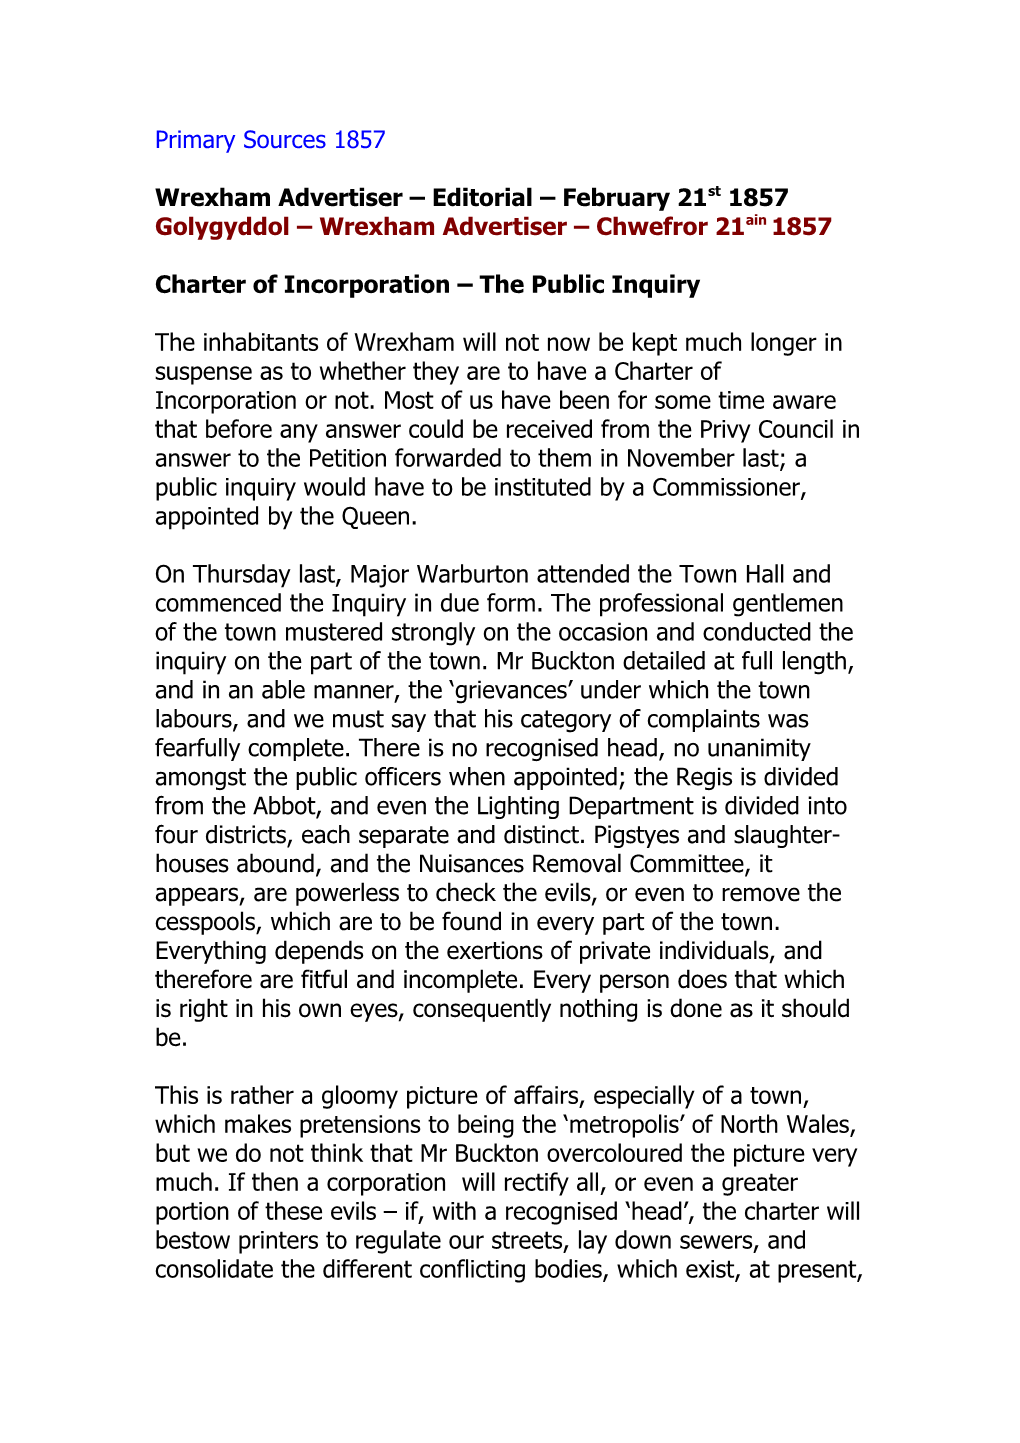 Golygyddol Wrexham Advertiser Chwefror 21Ain 1857